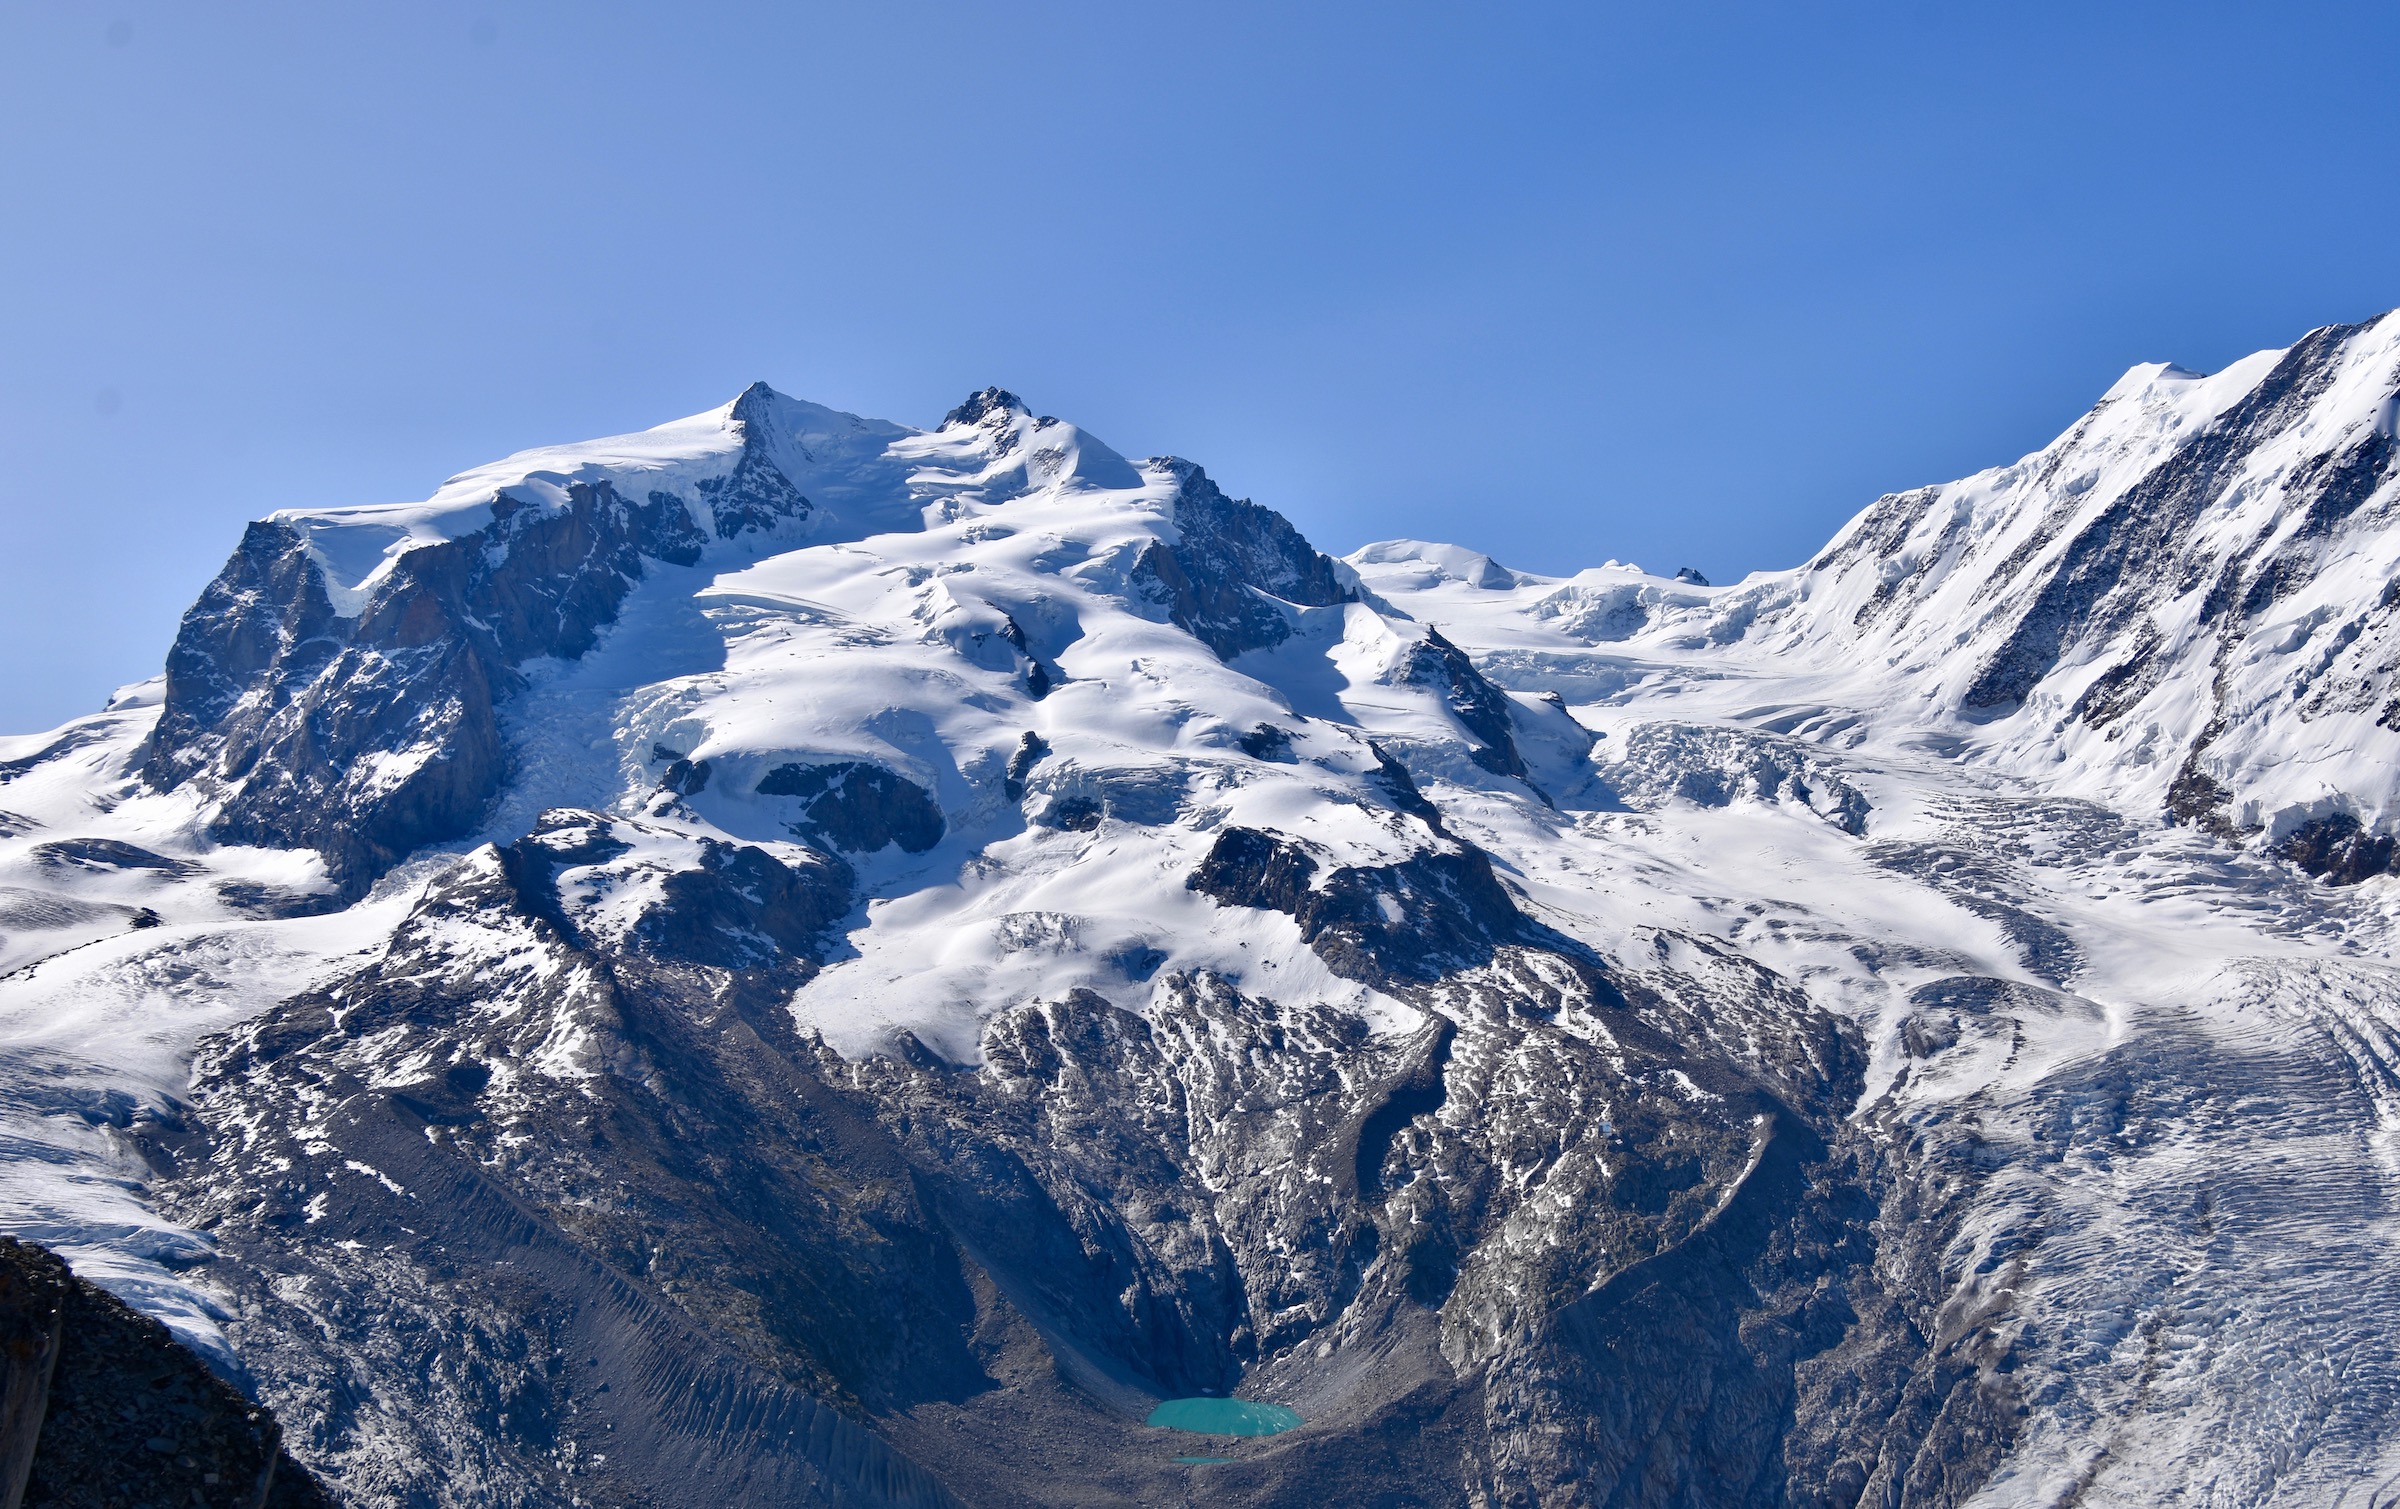 Alpine Glaciers near the Matterhorn